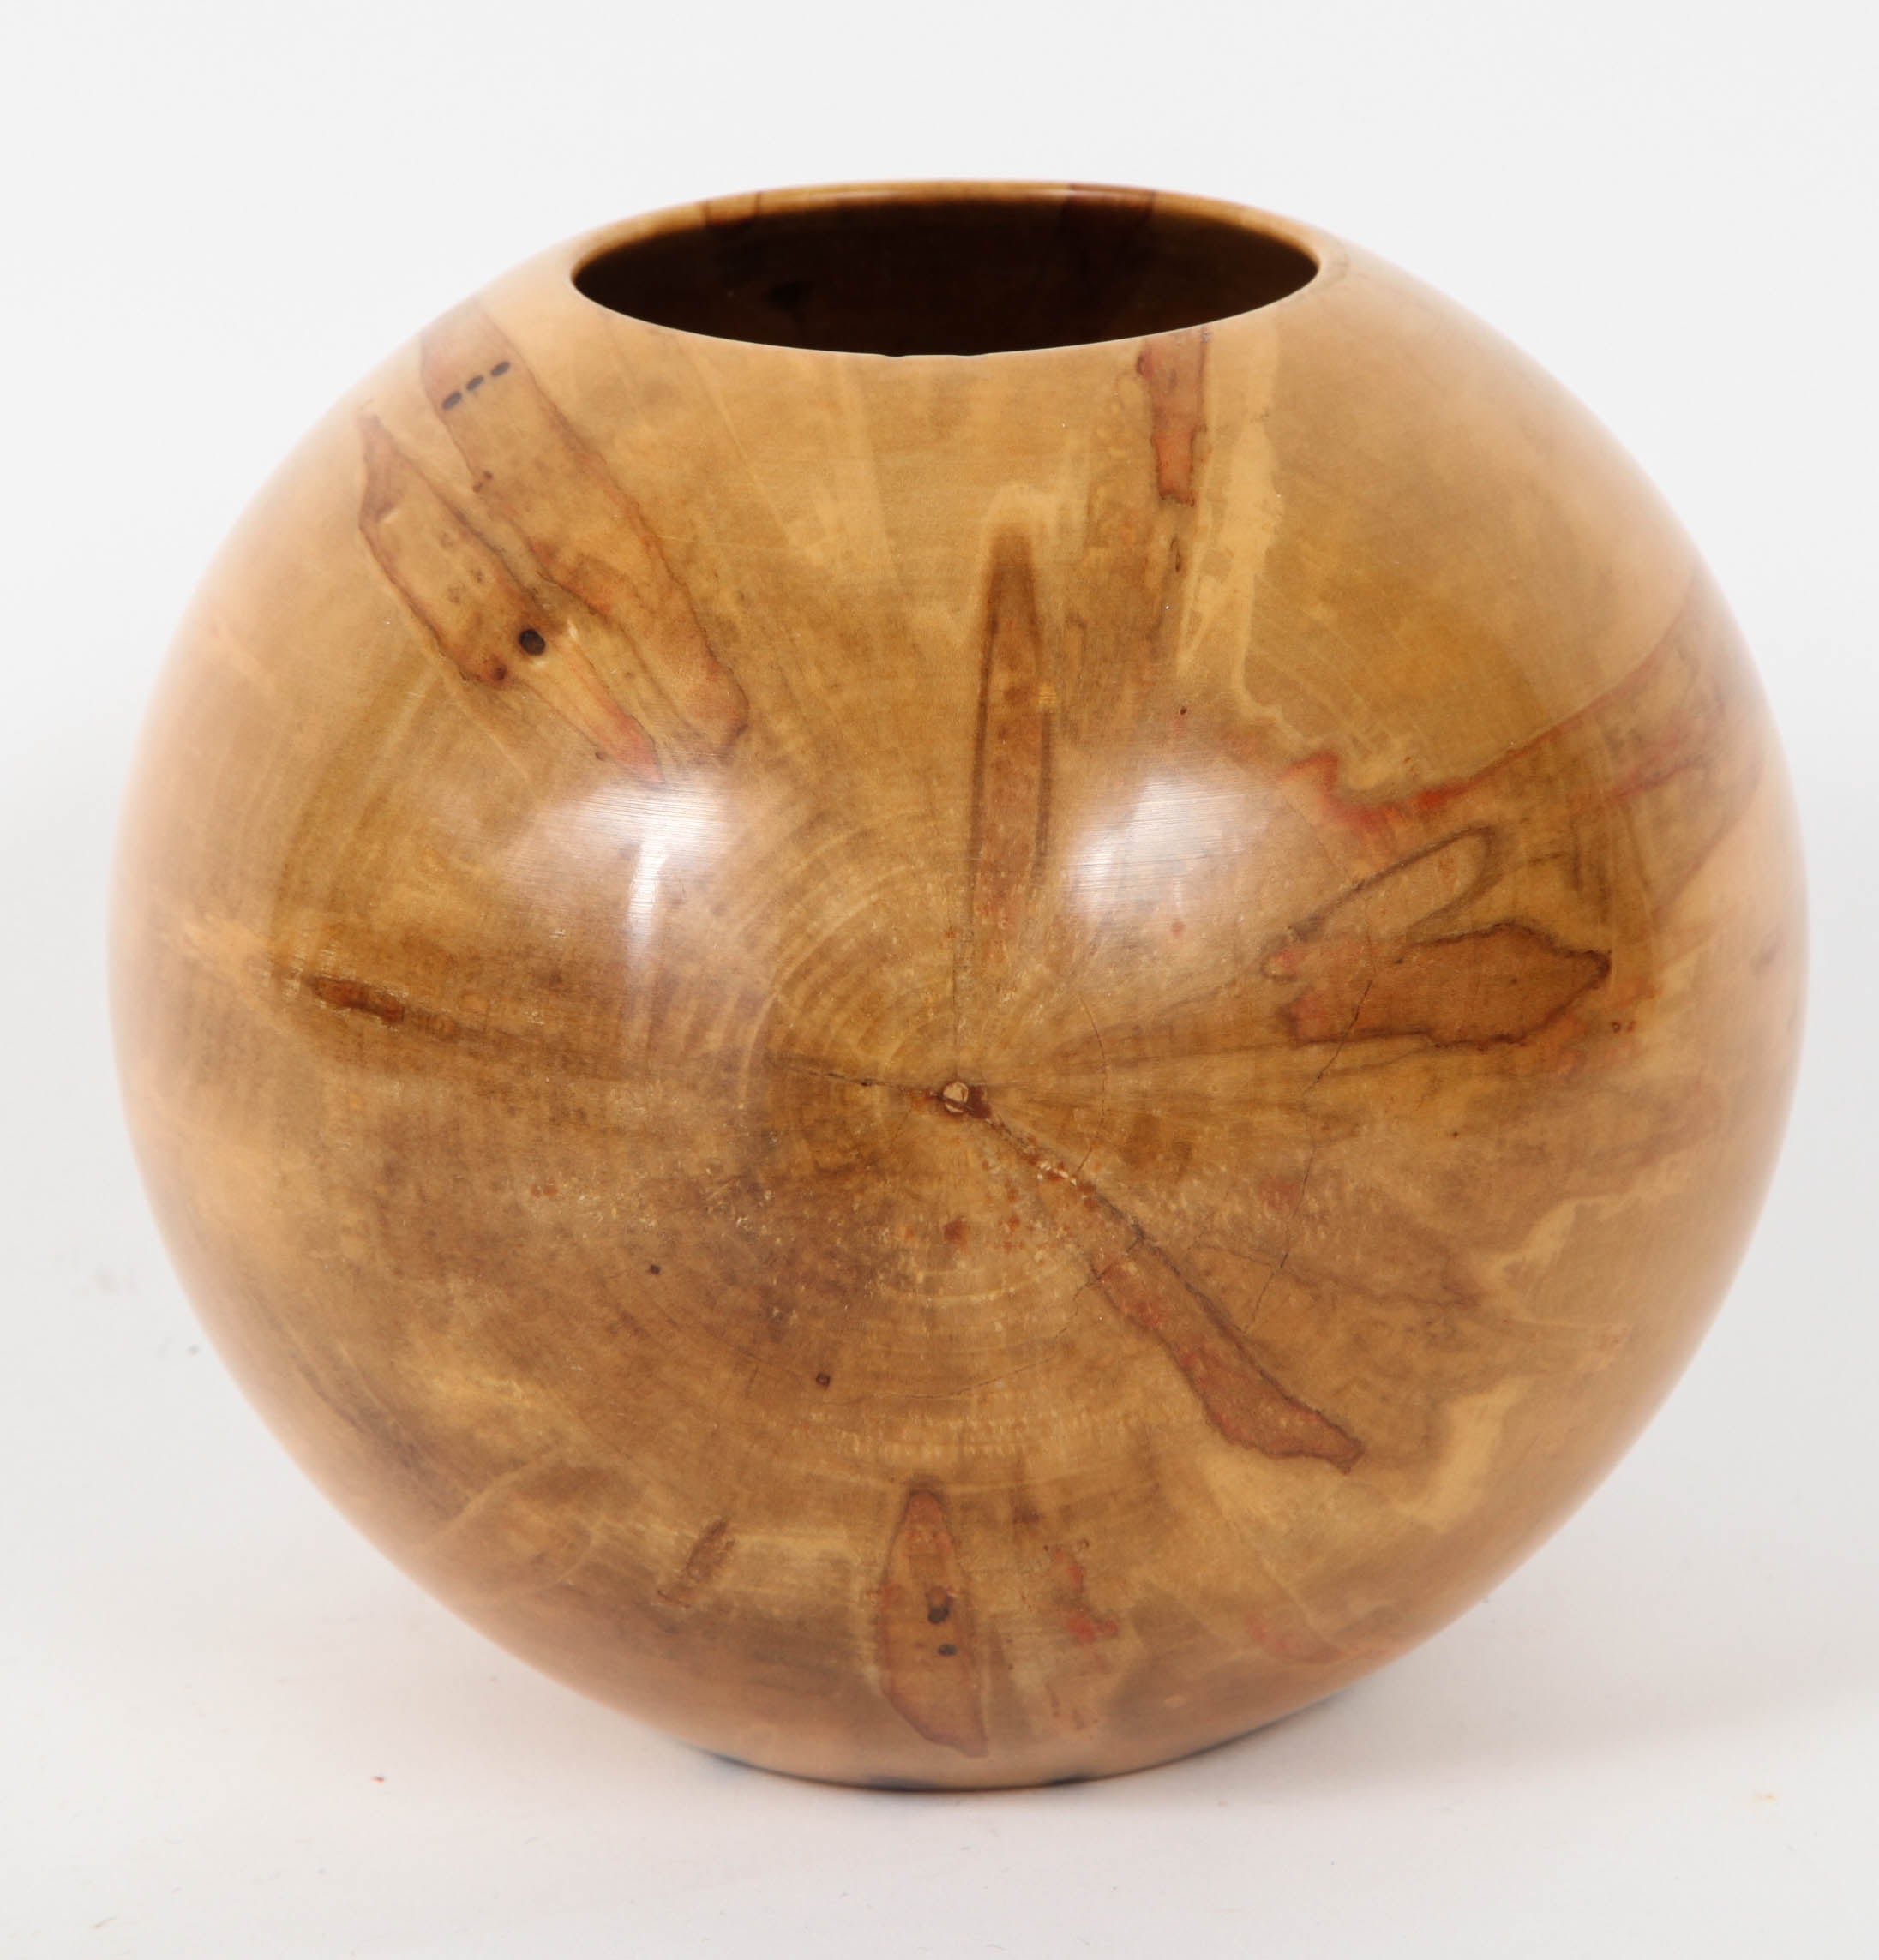 Ash Leaf Maple Vessel by Philip Moulthrop